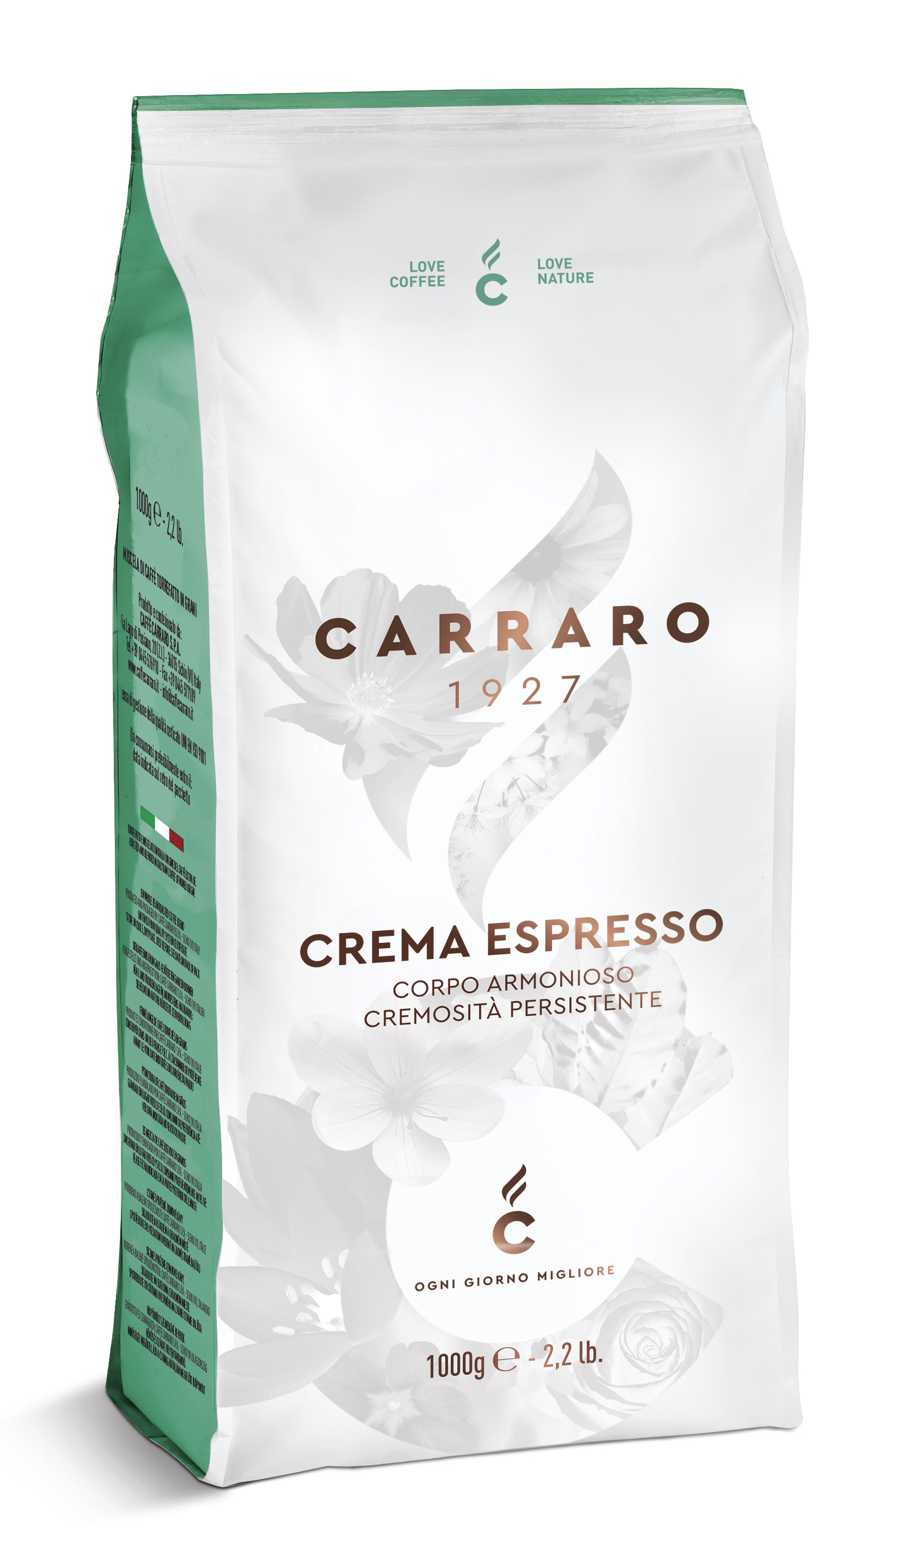 Crema Espresso coffee beans